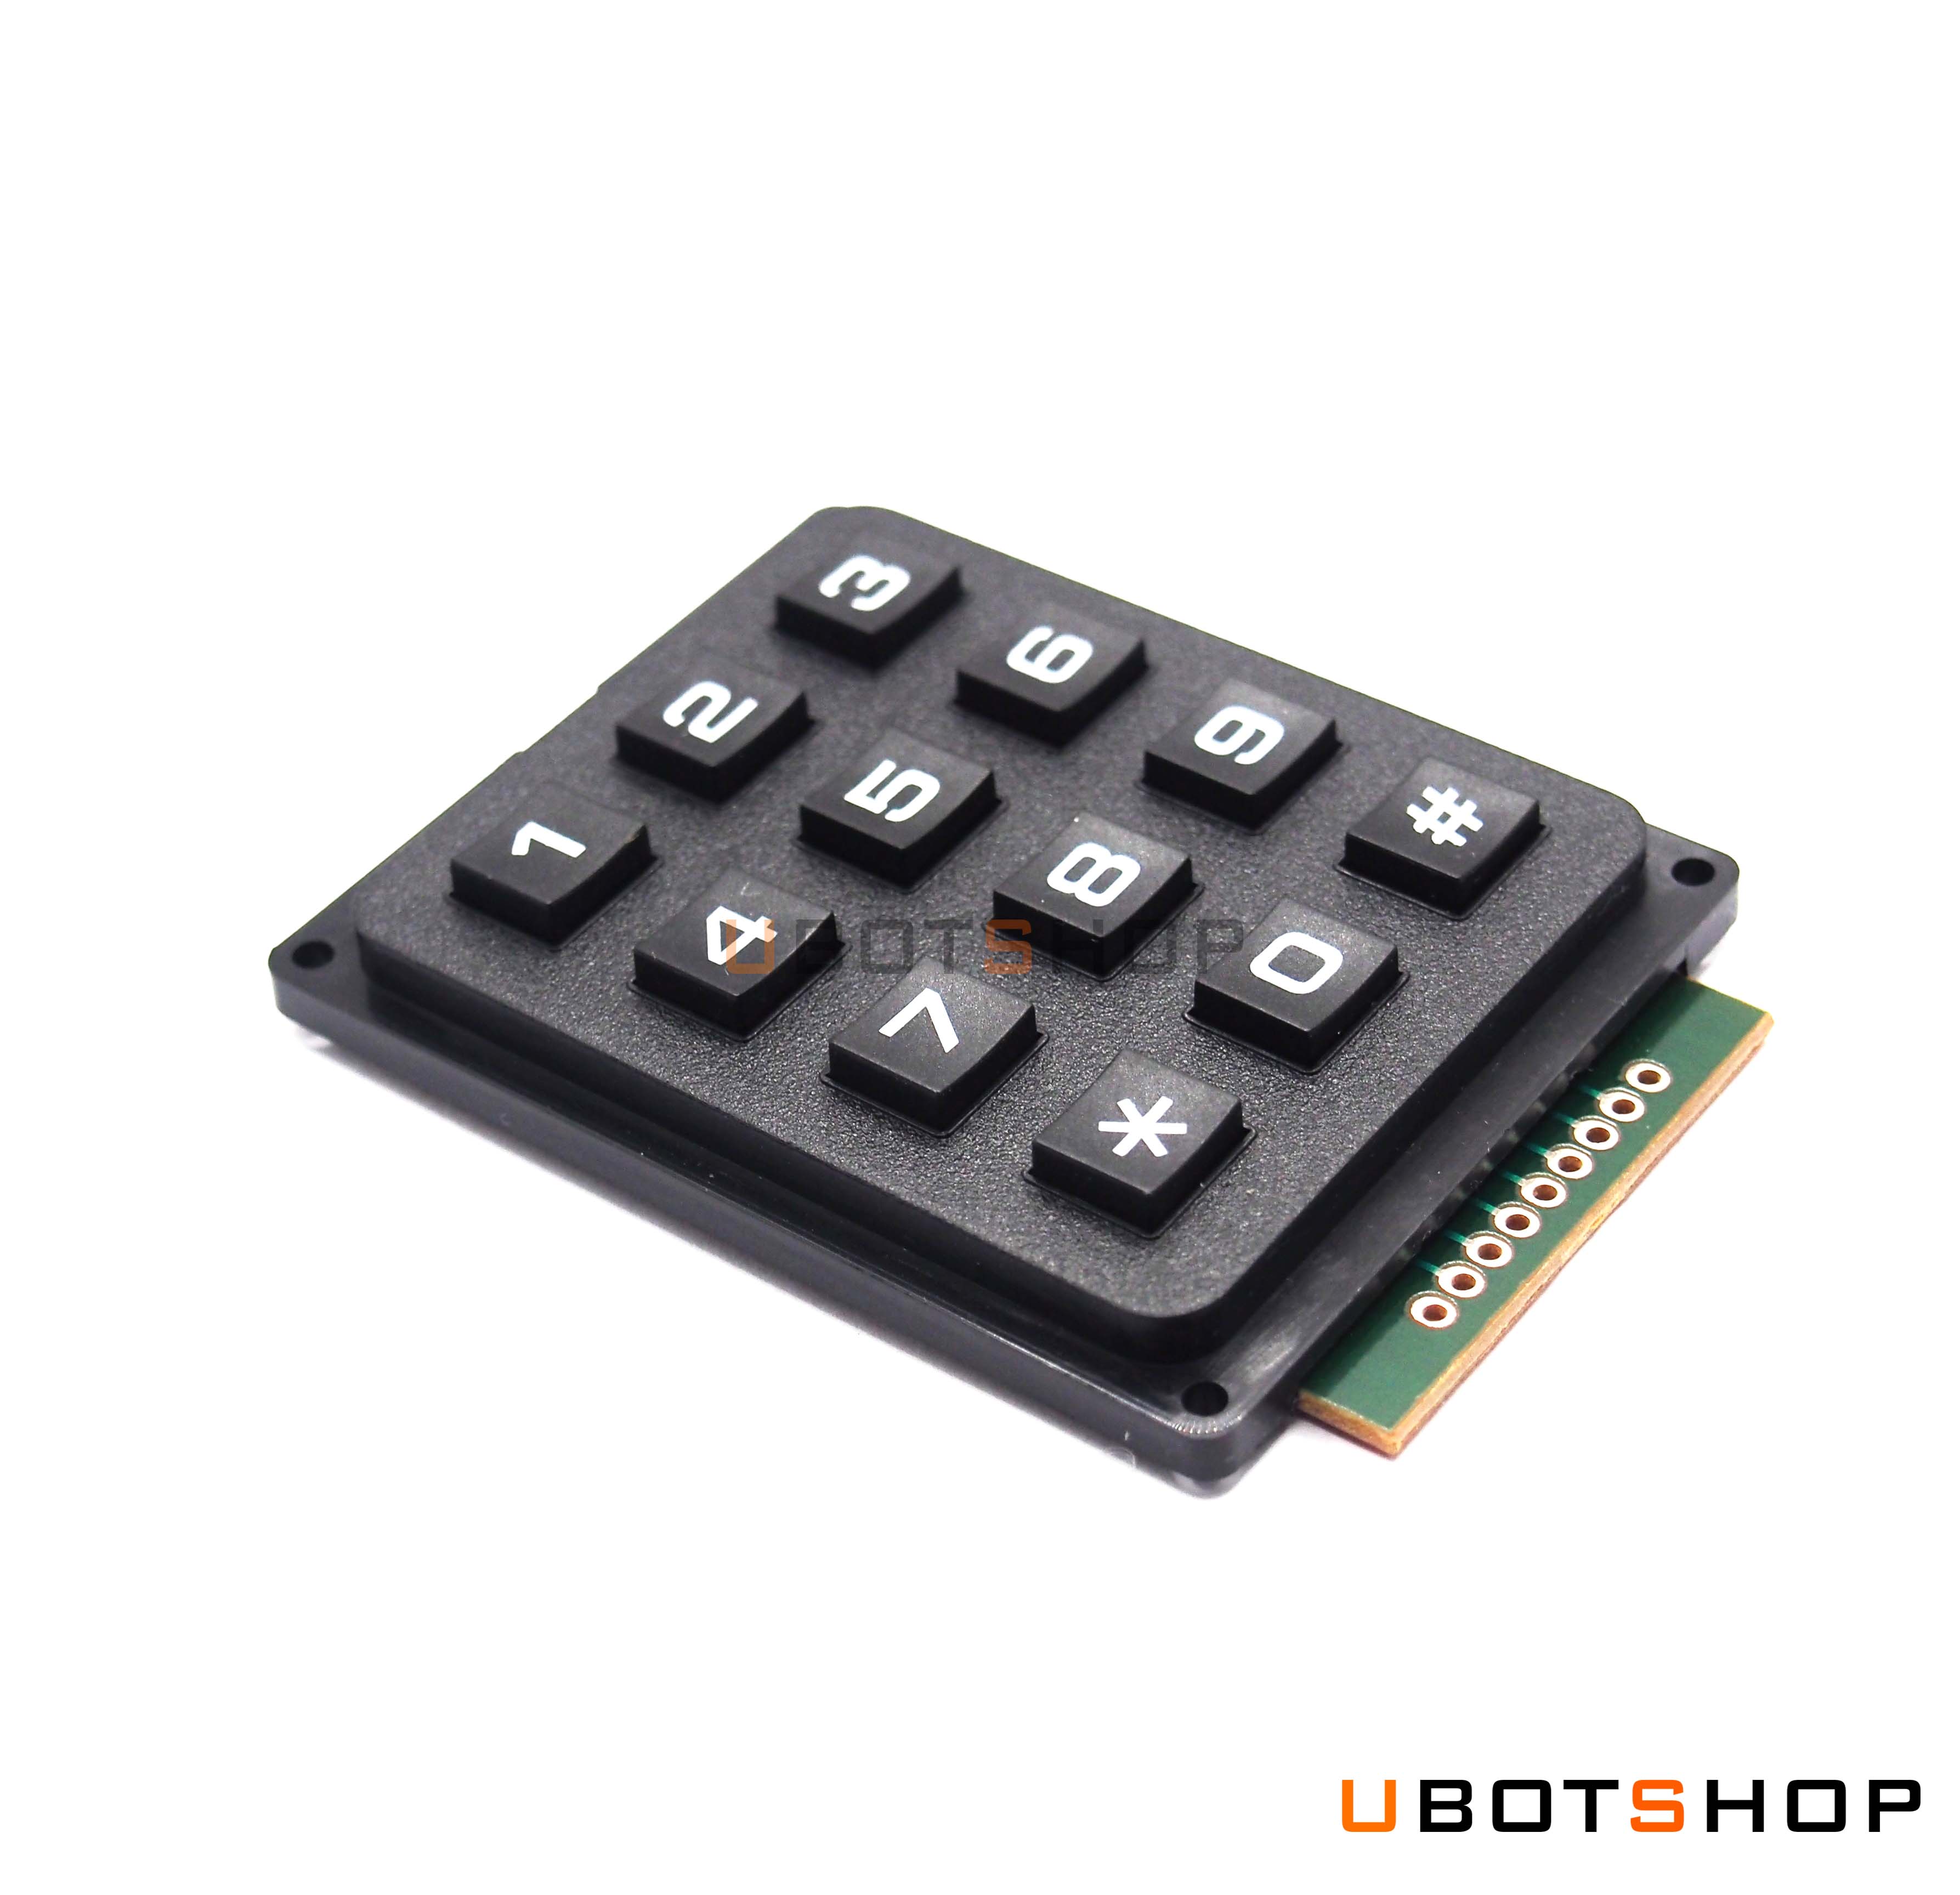 3x4 Matrix Keyboard (MK0004)